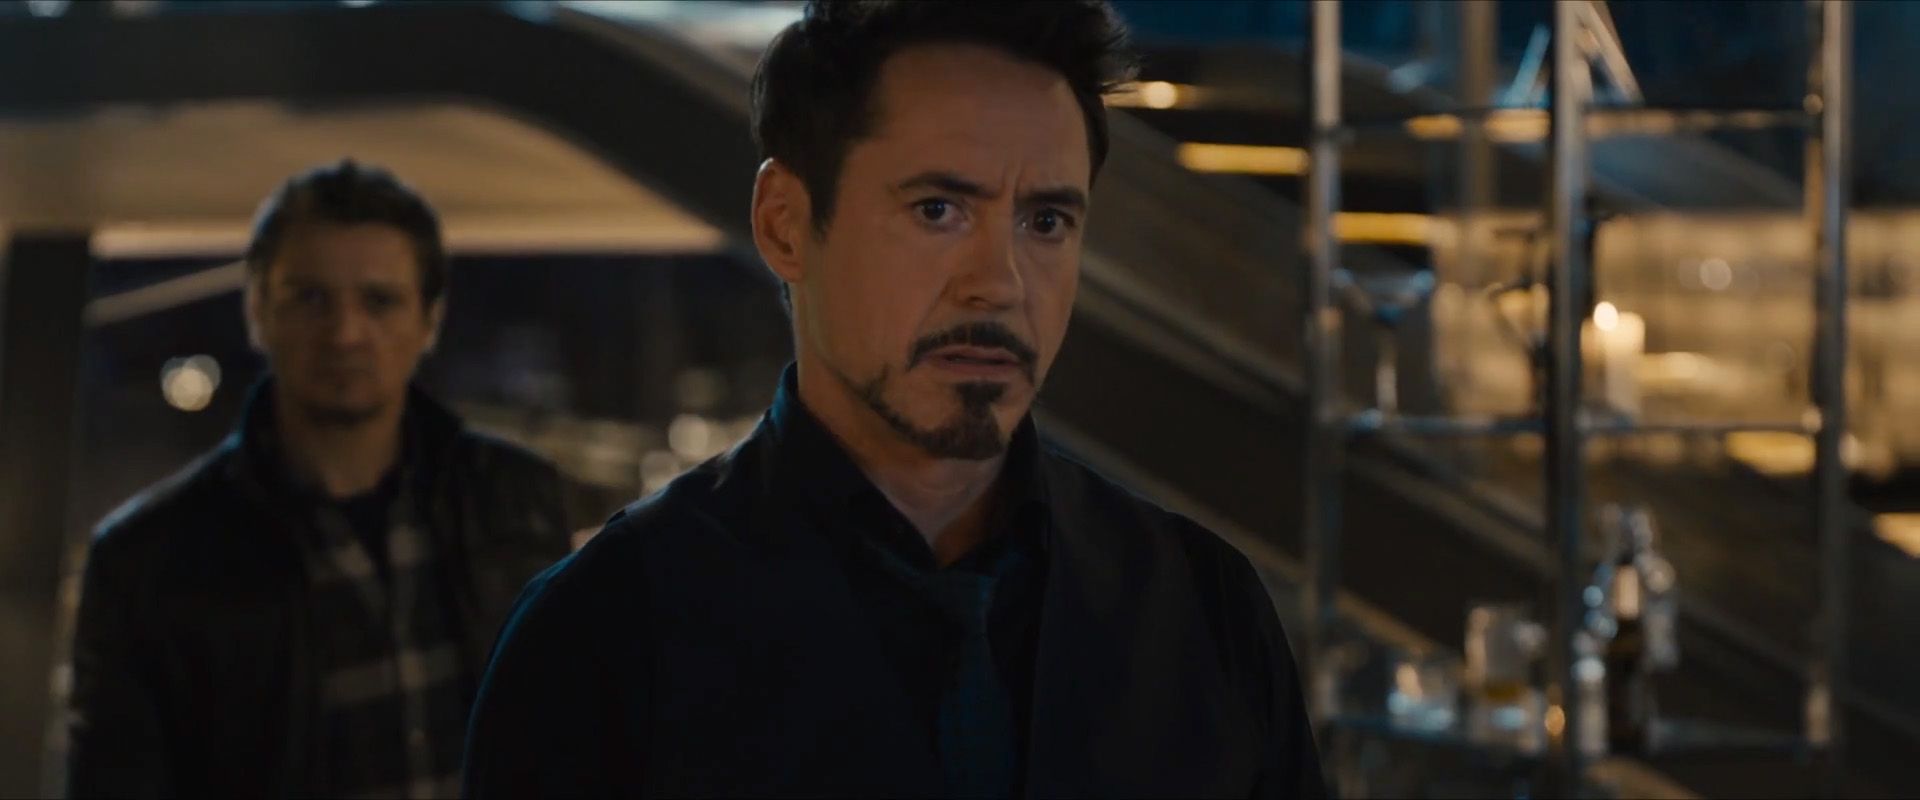 Avengers Age of Ultron Trailer 1 Robert Downey Jr Reacts